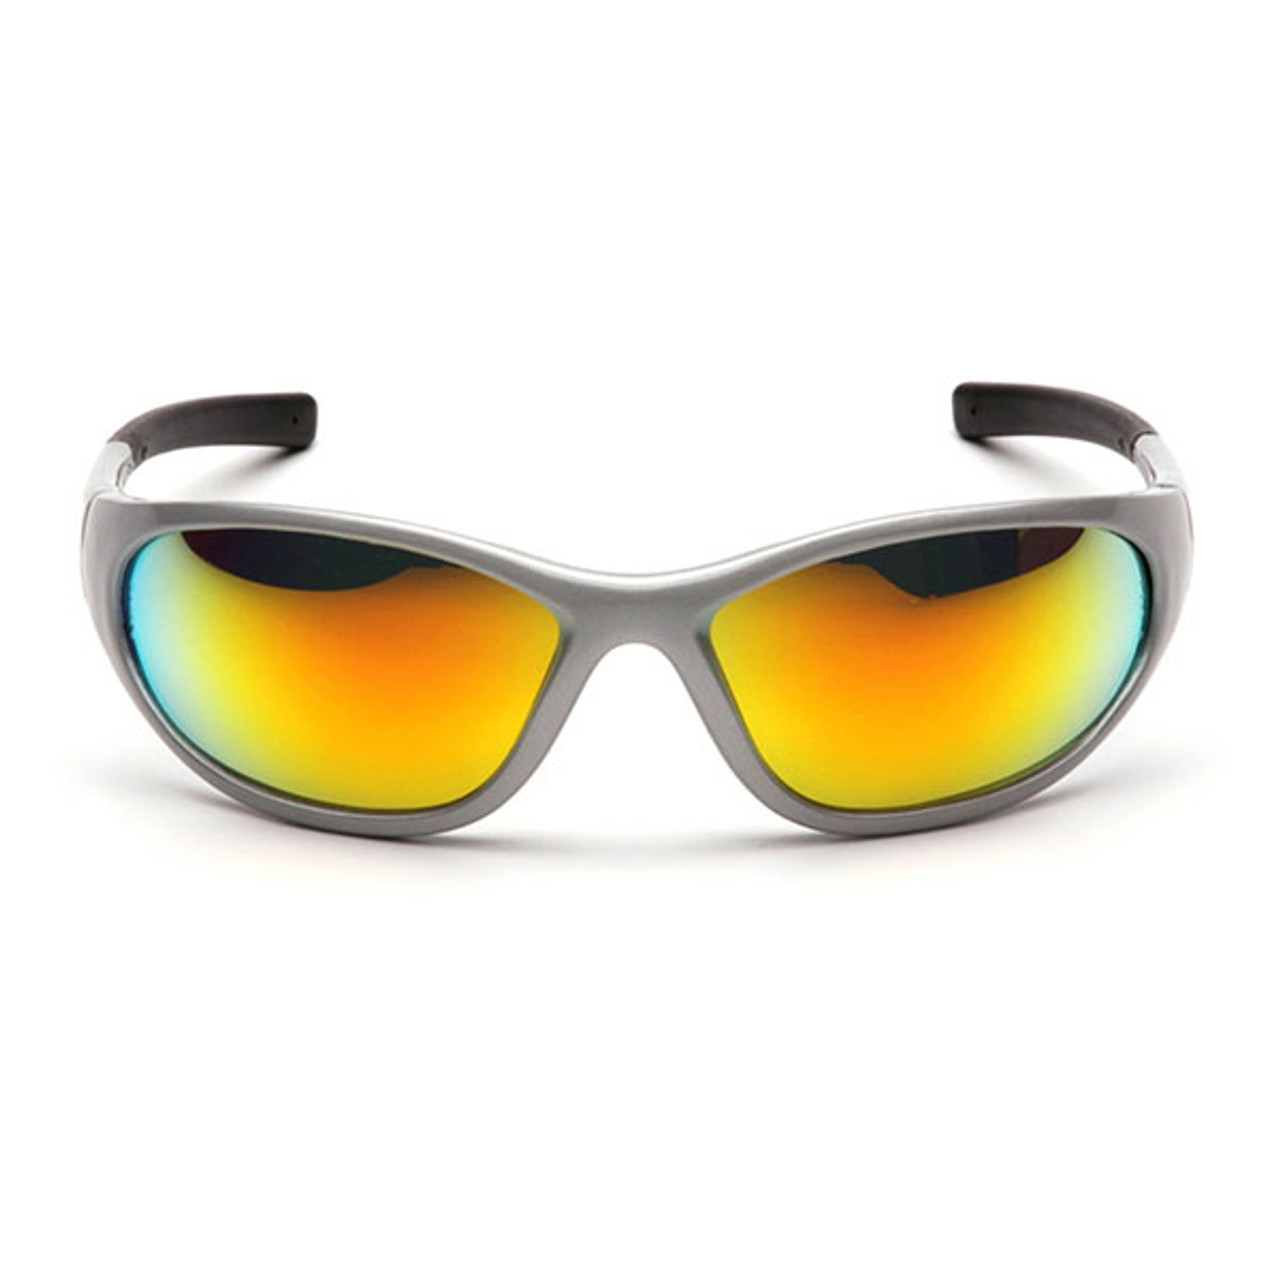 Pyramex-Zone-II-Safety-Glasses-Silver-Ice-Orange_front